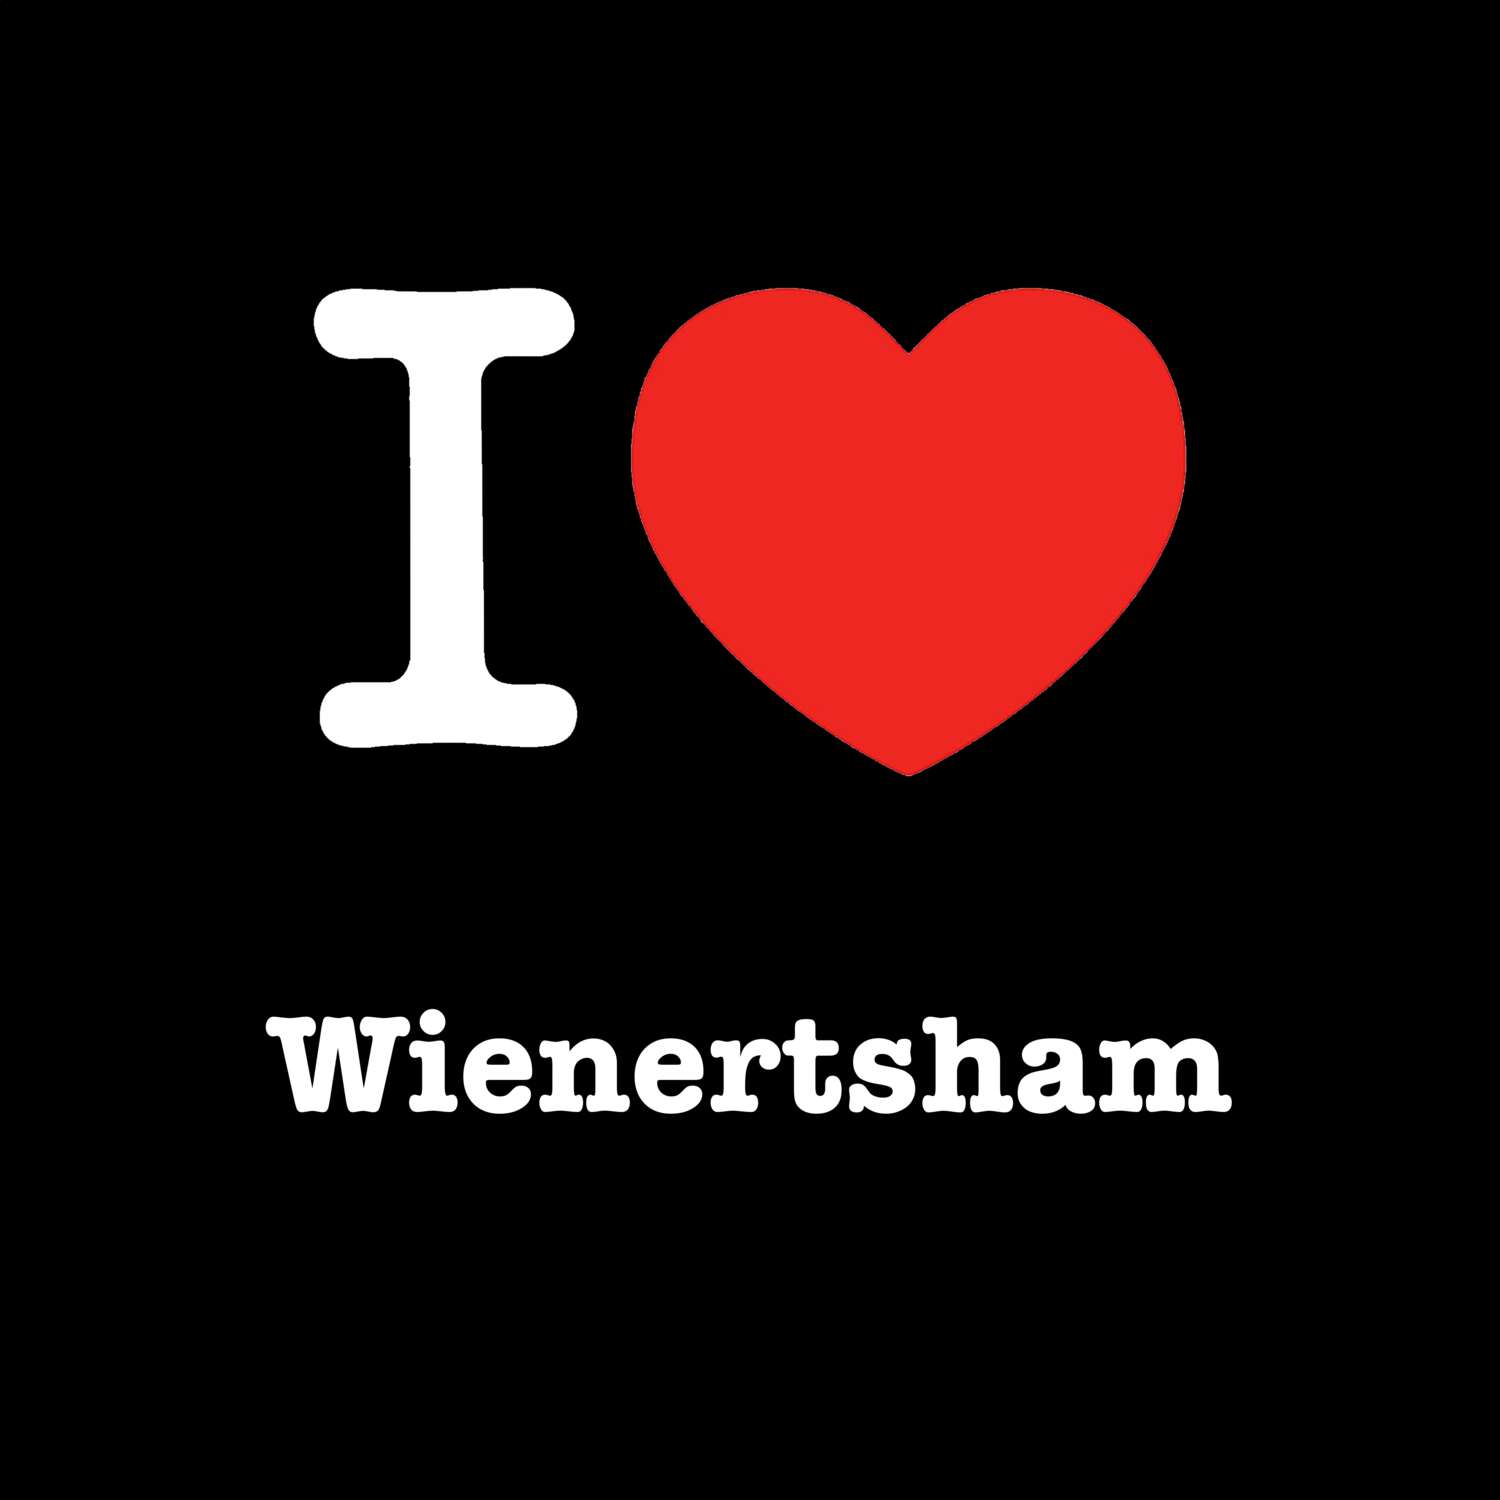 Wienertsham T-Shirt »I love«